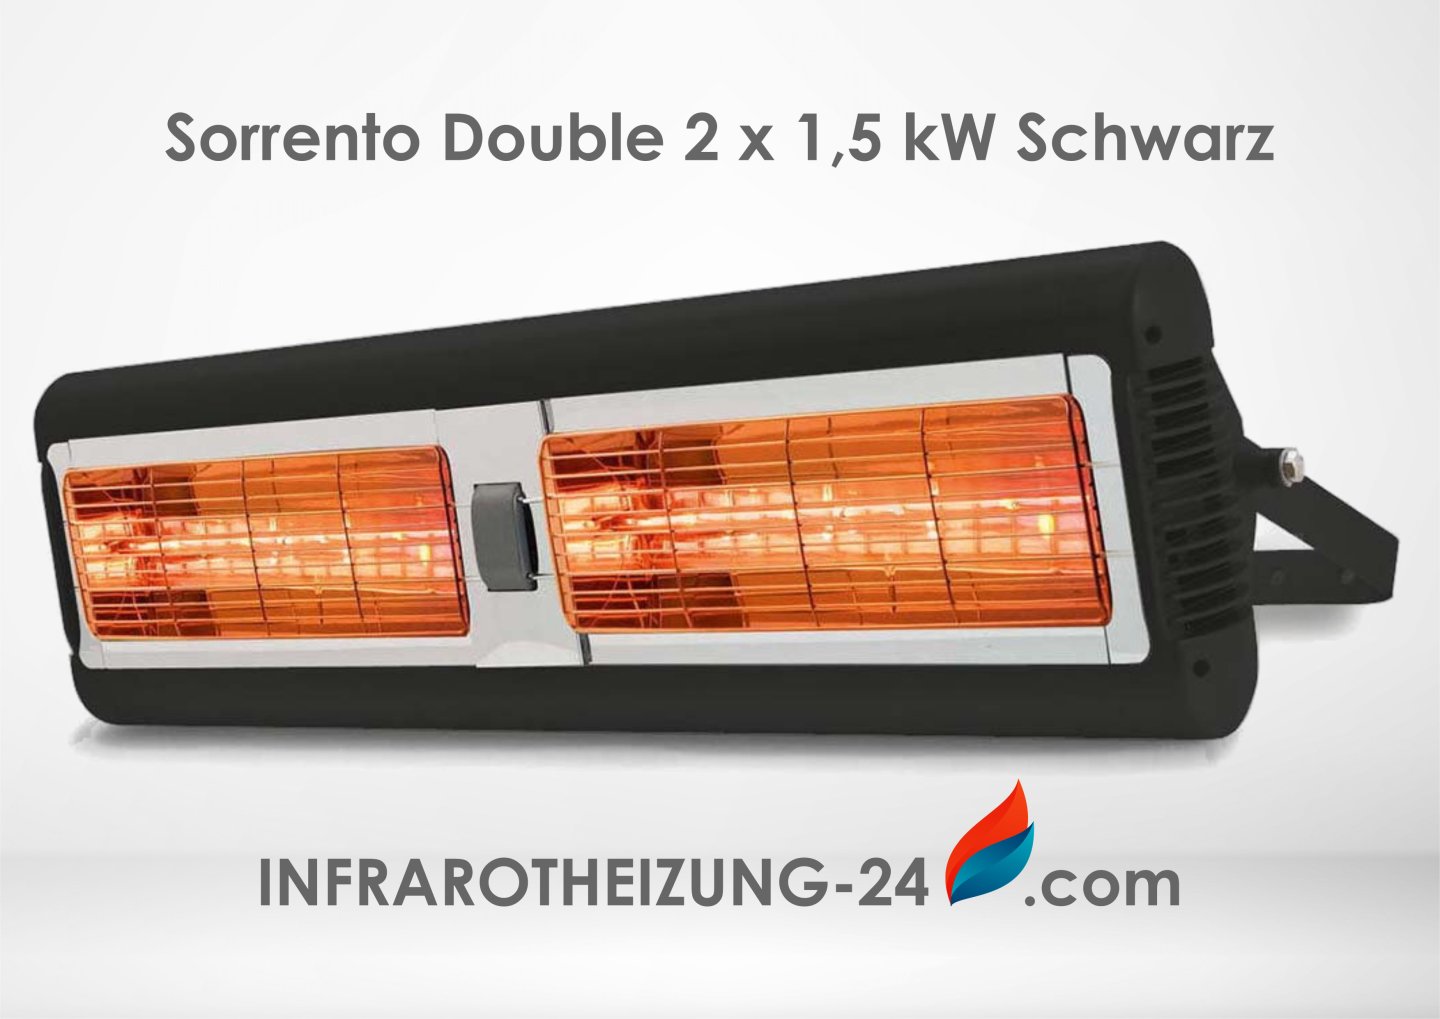 Sorrento Double 2 x 1,5 KW für 24m²